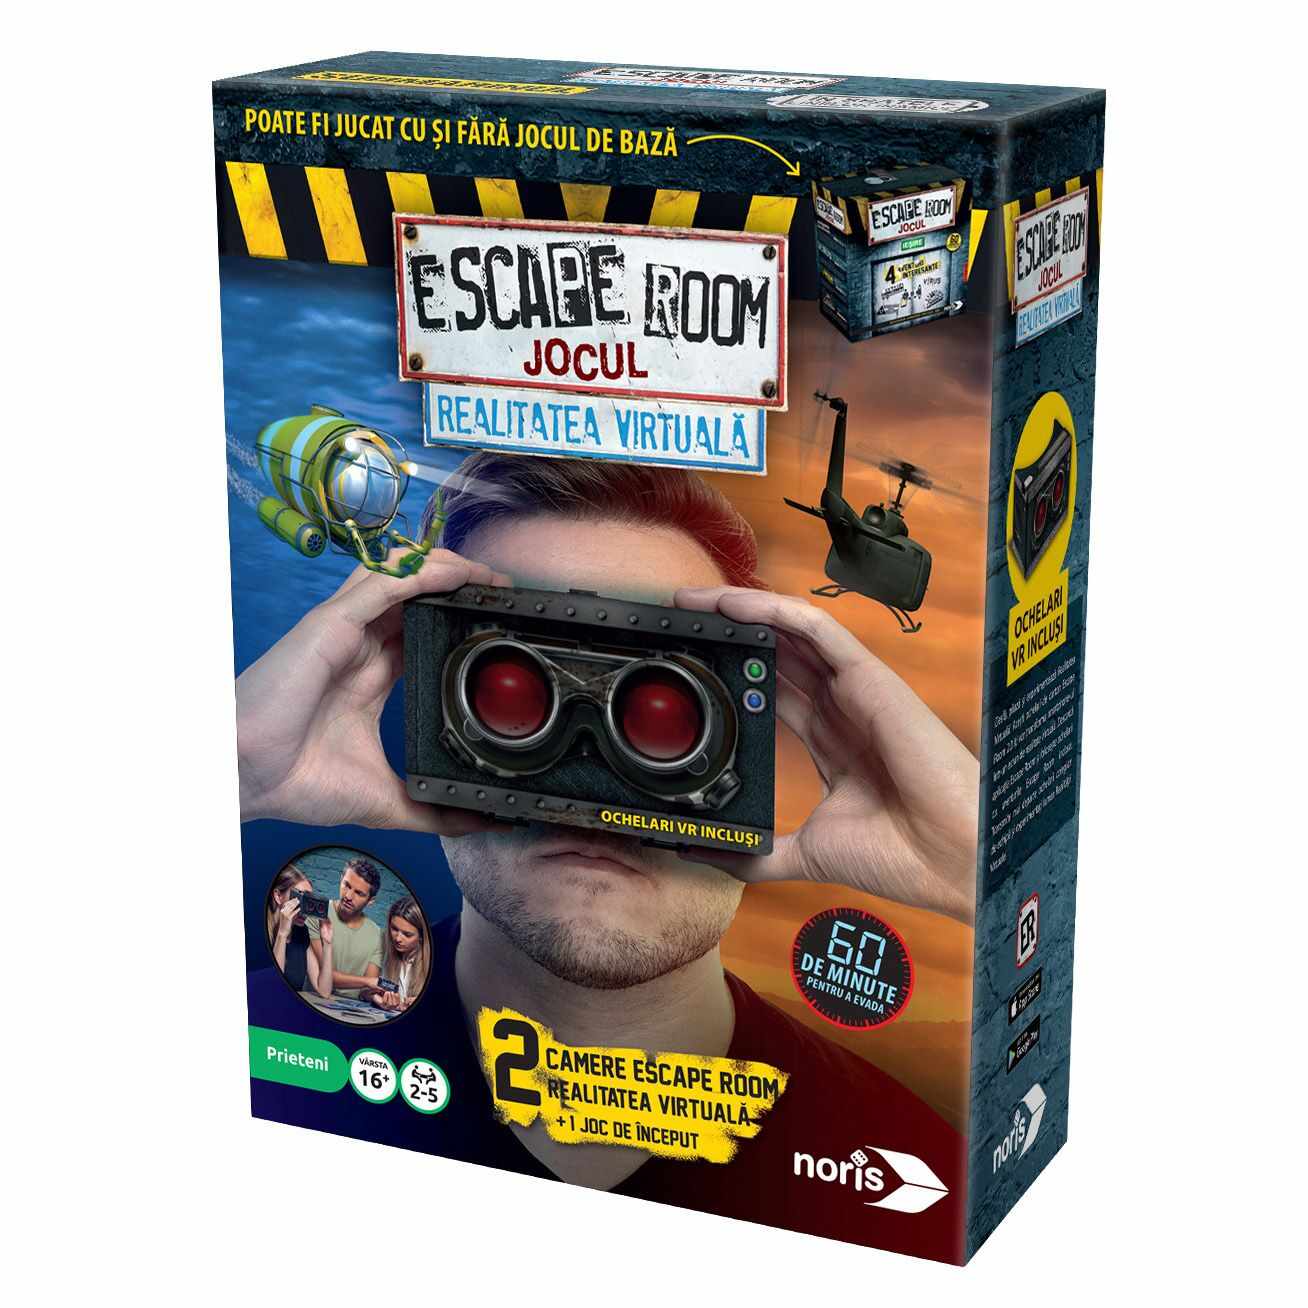 Escape Room Jocul - Realitatea Virtuala | Noris